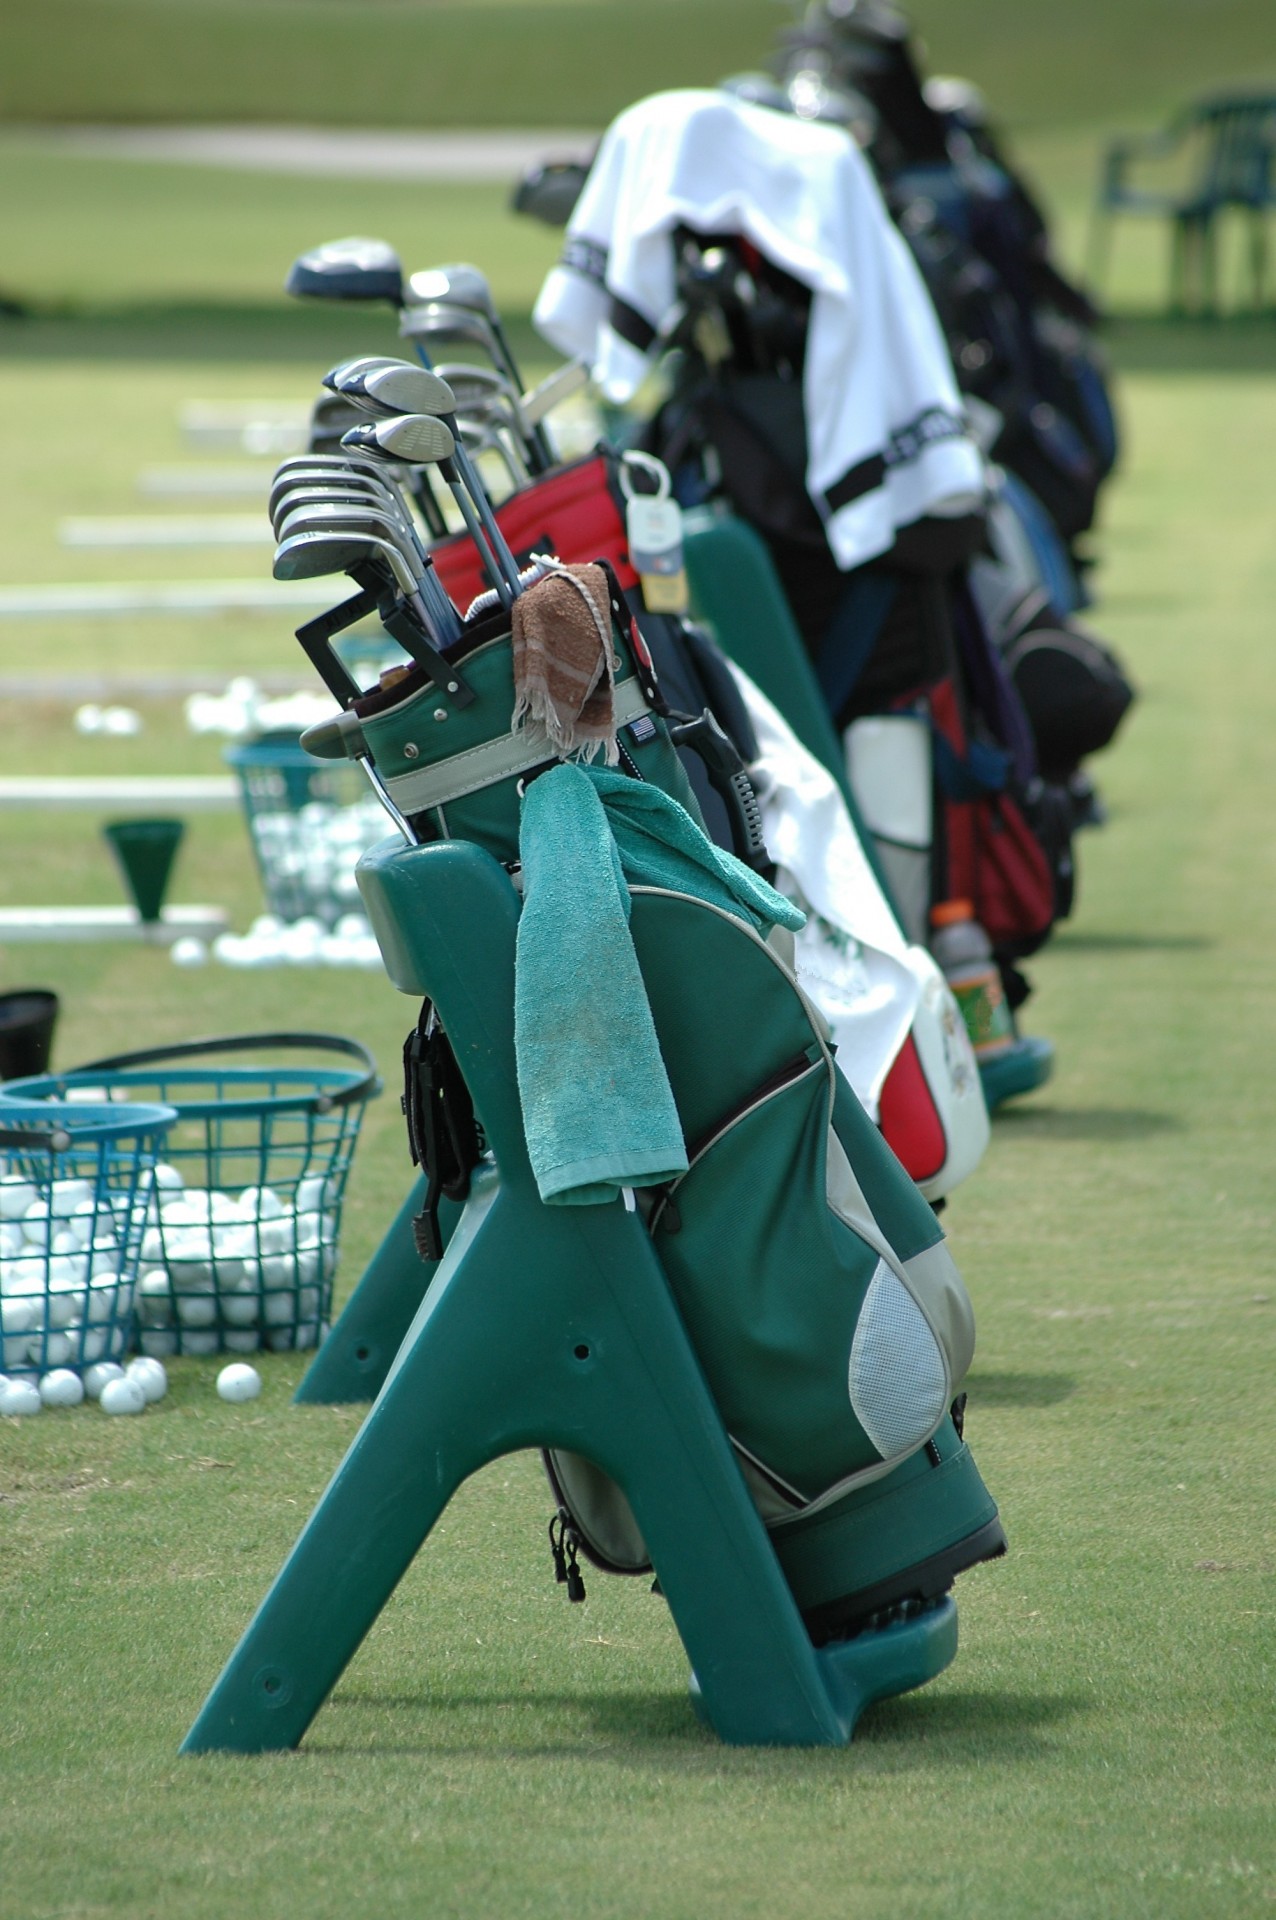 golf bag clubs equipment free photo